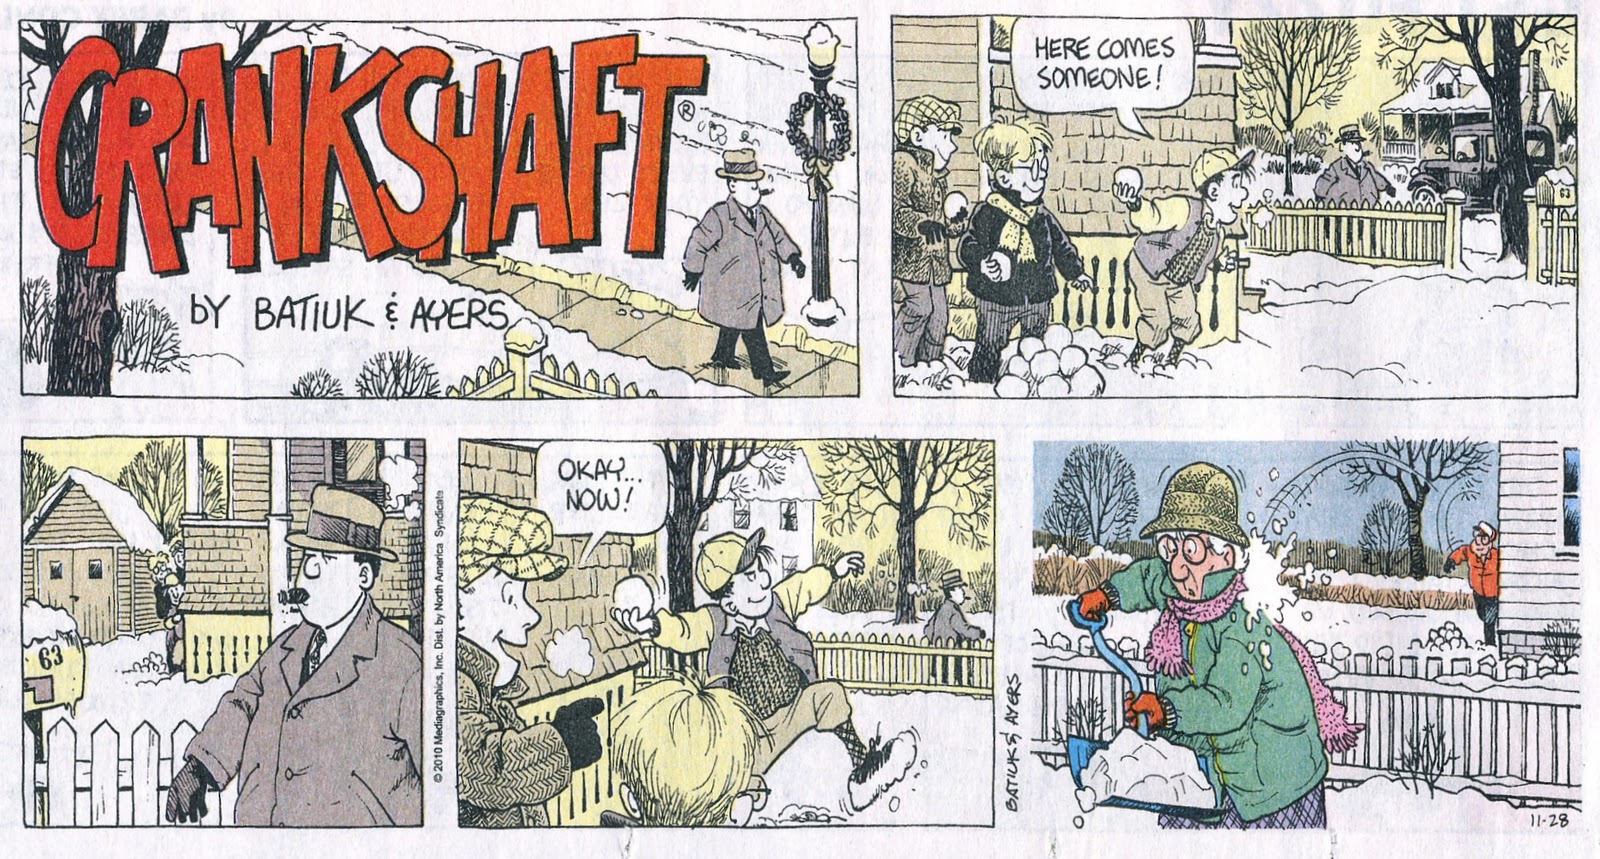 Today’s Sunday comic strip, Crankshaft, reminded me of childhood pranks reg...